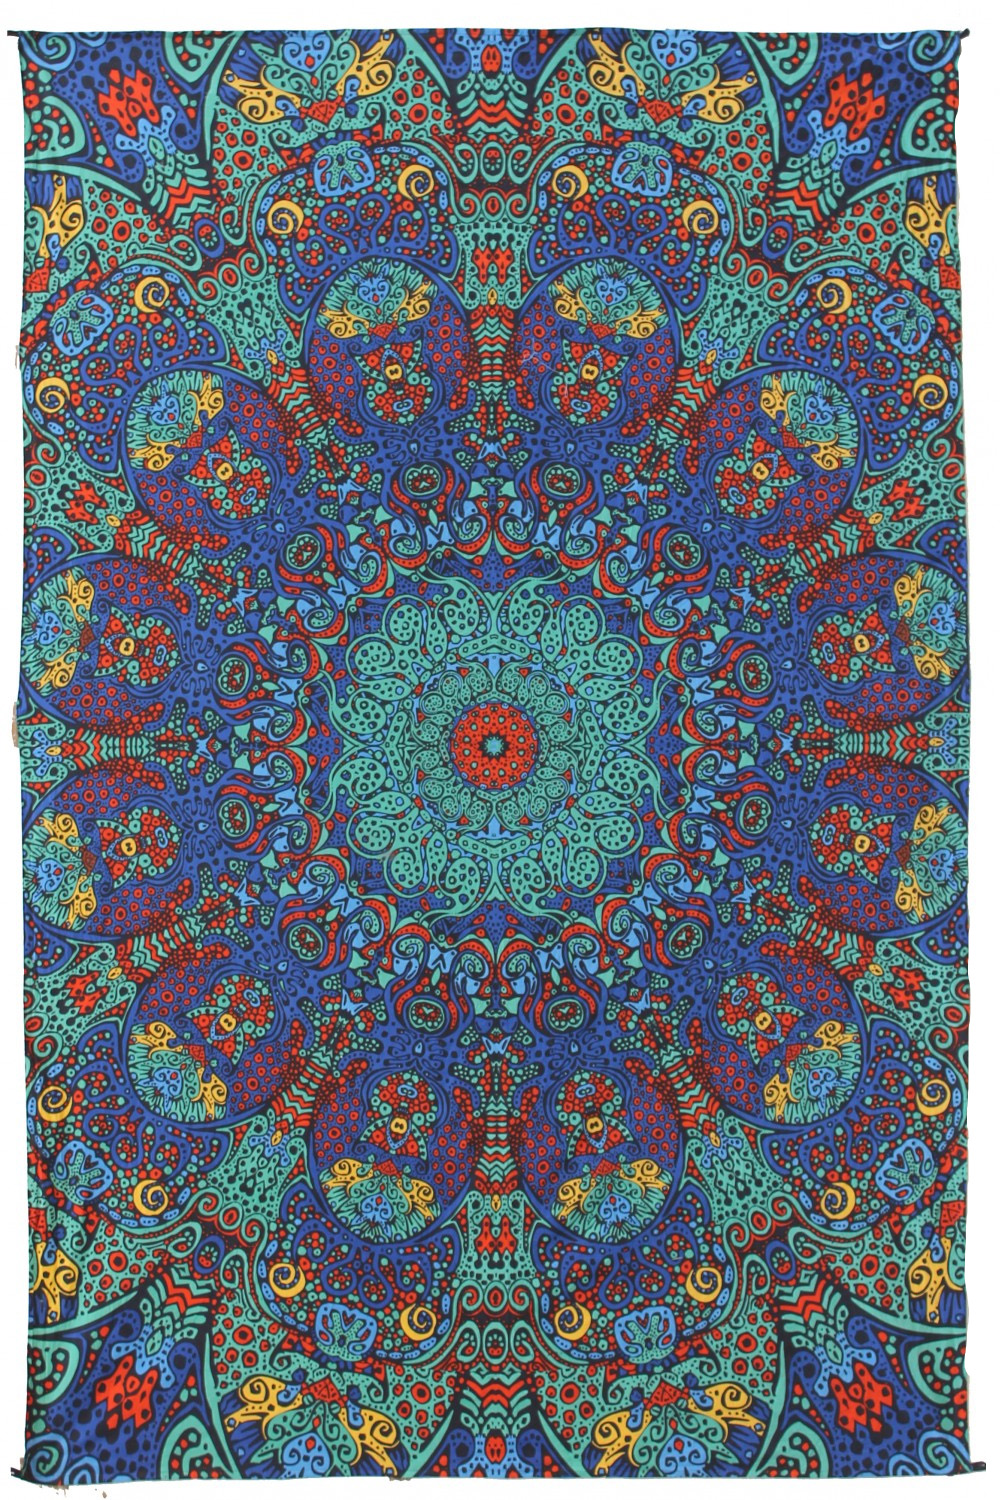 3D Blue Burst Tapestry 60x90 - Artwork by Chris Pinkerton  **SALE**